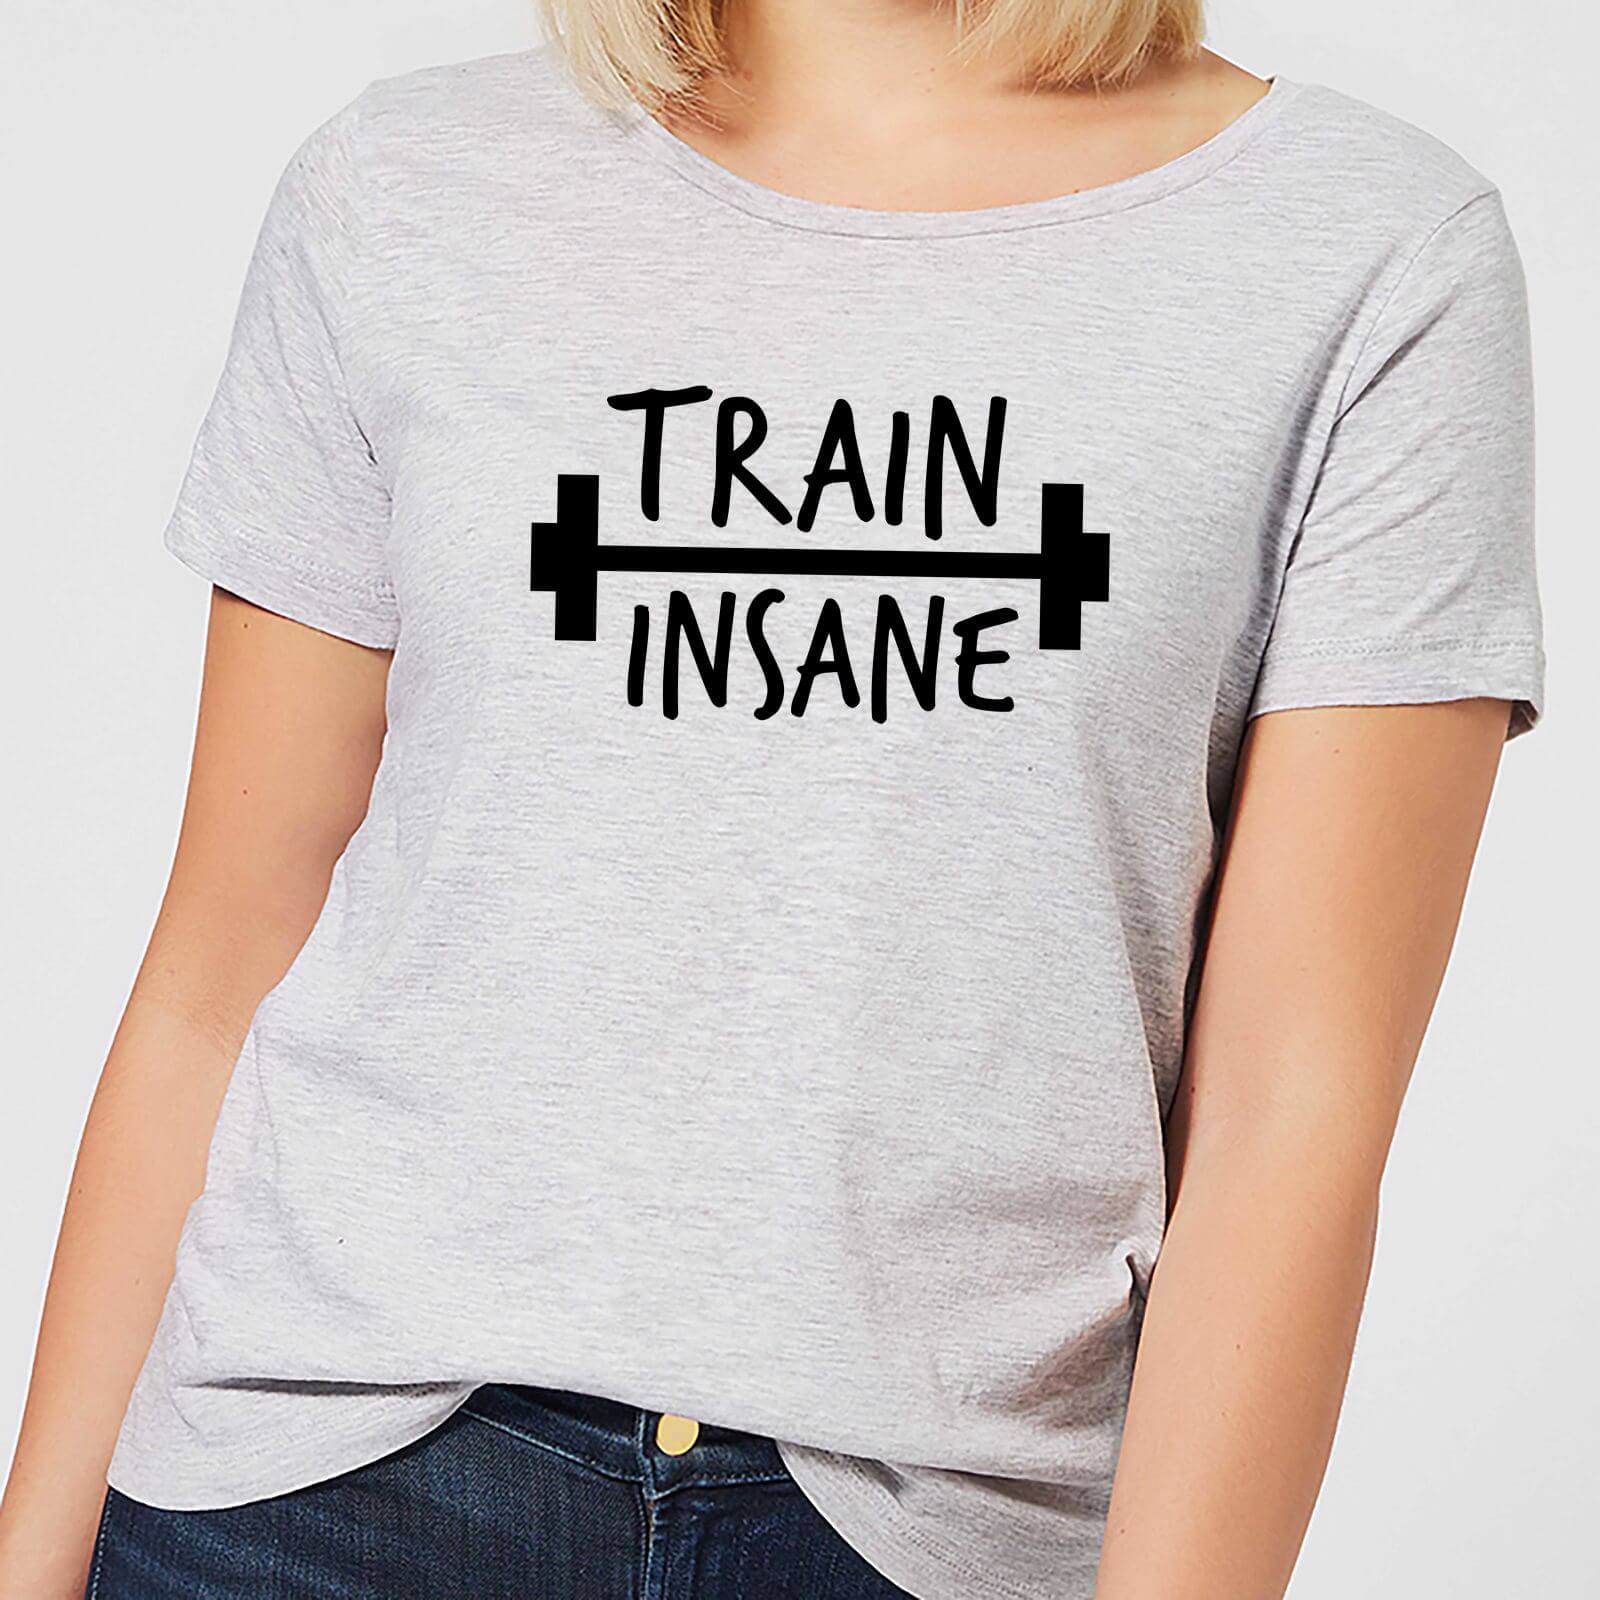 Train Insane Women's T-Shirt - Grey - M - Grey